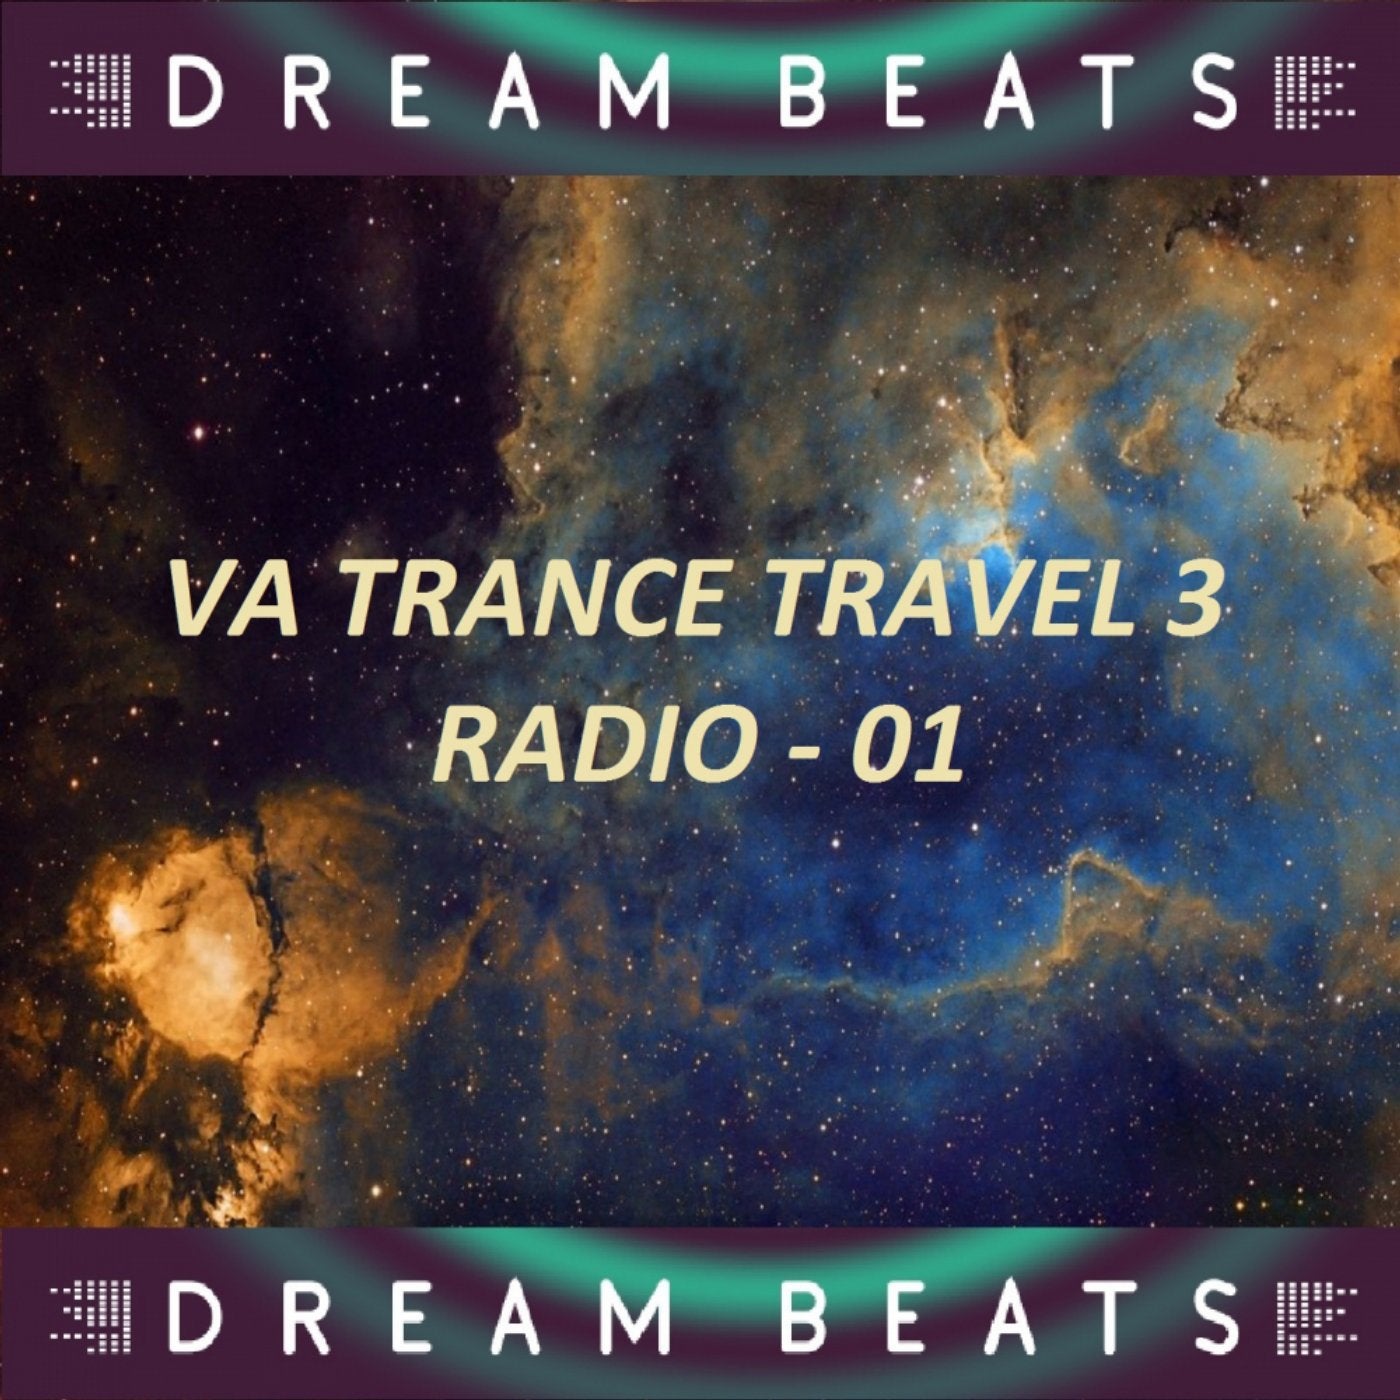 VA Trance Travel 3 Radio: 01